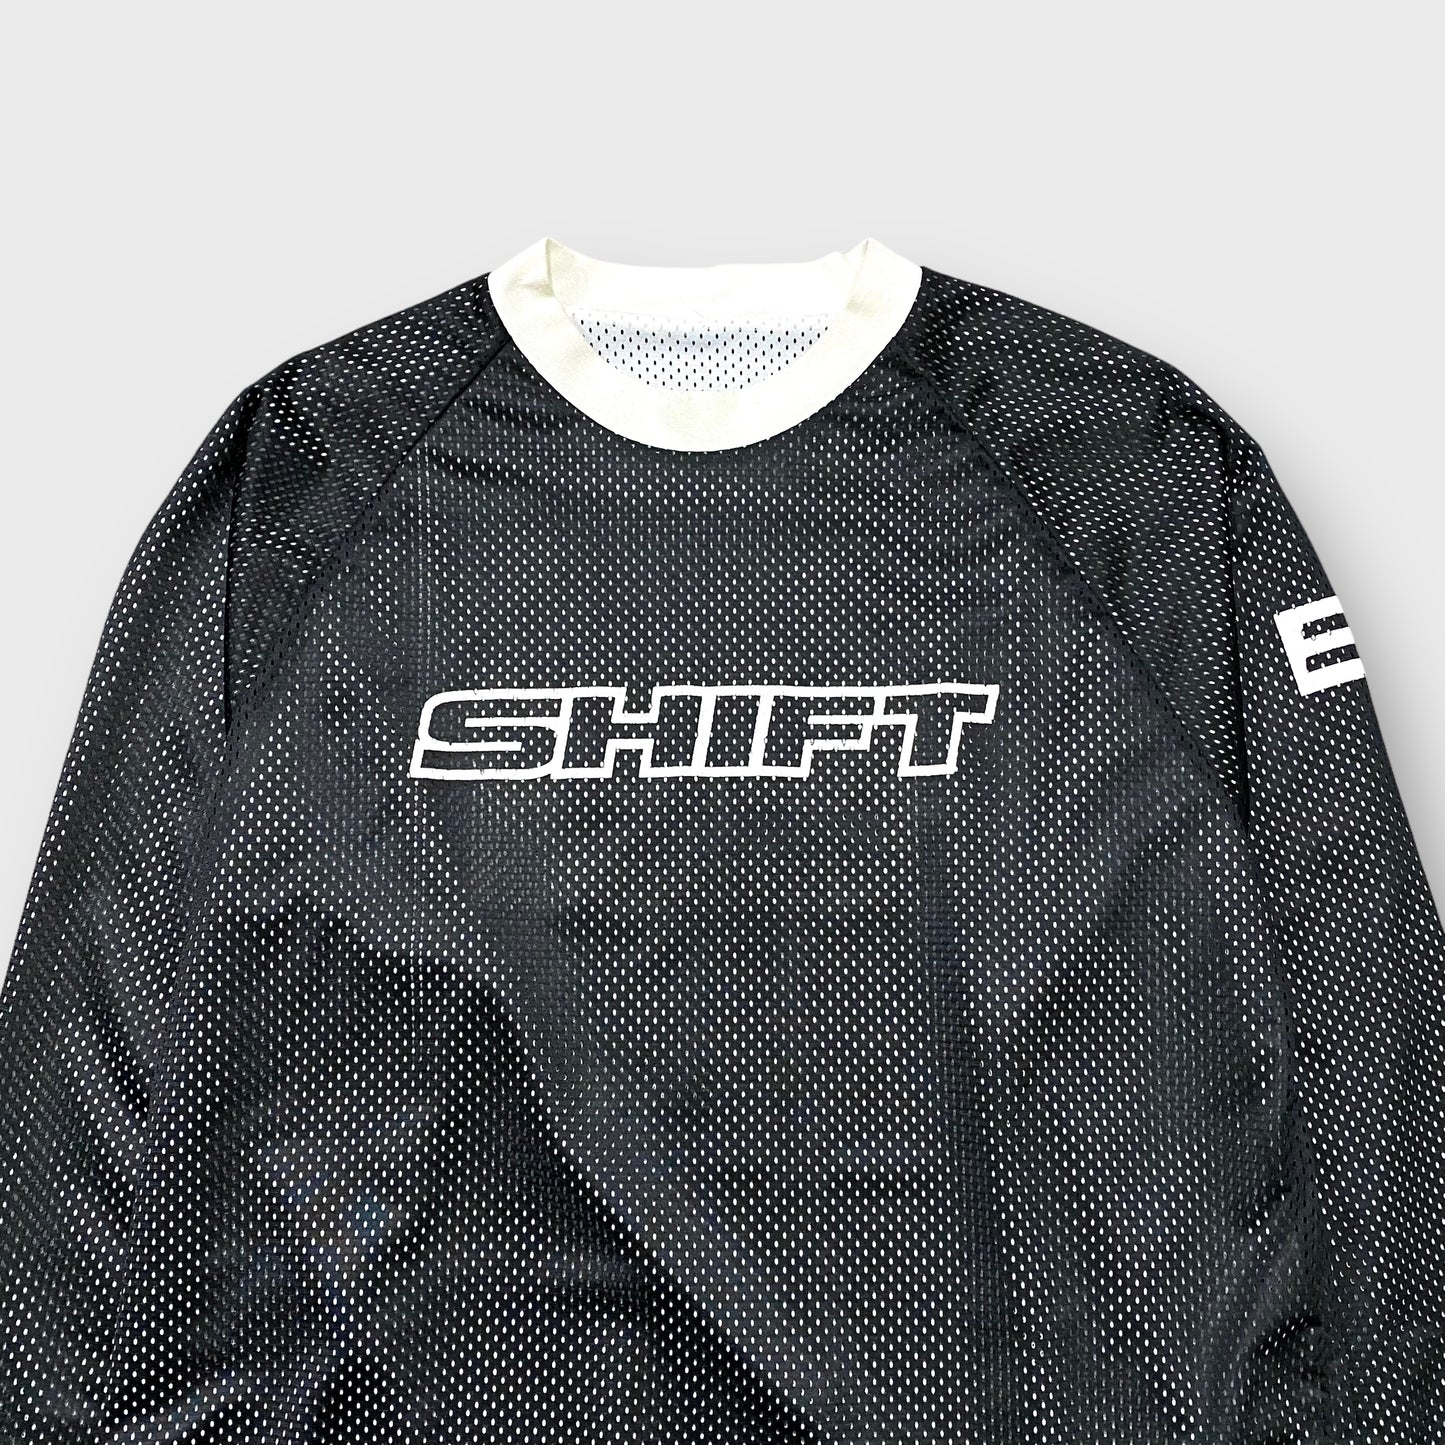 "SHIFT" Reversible mesh top